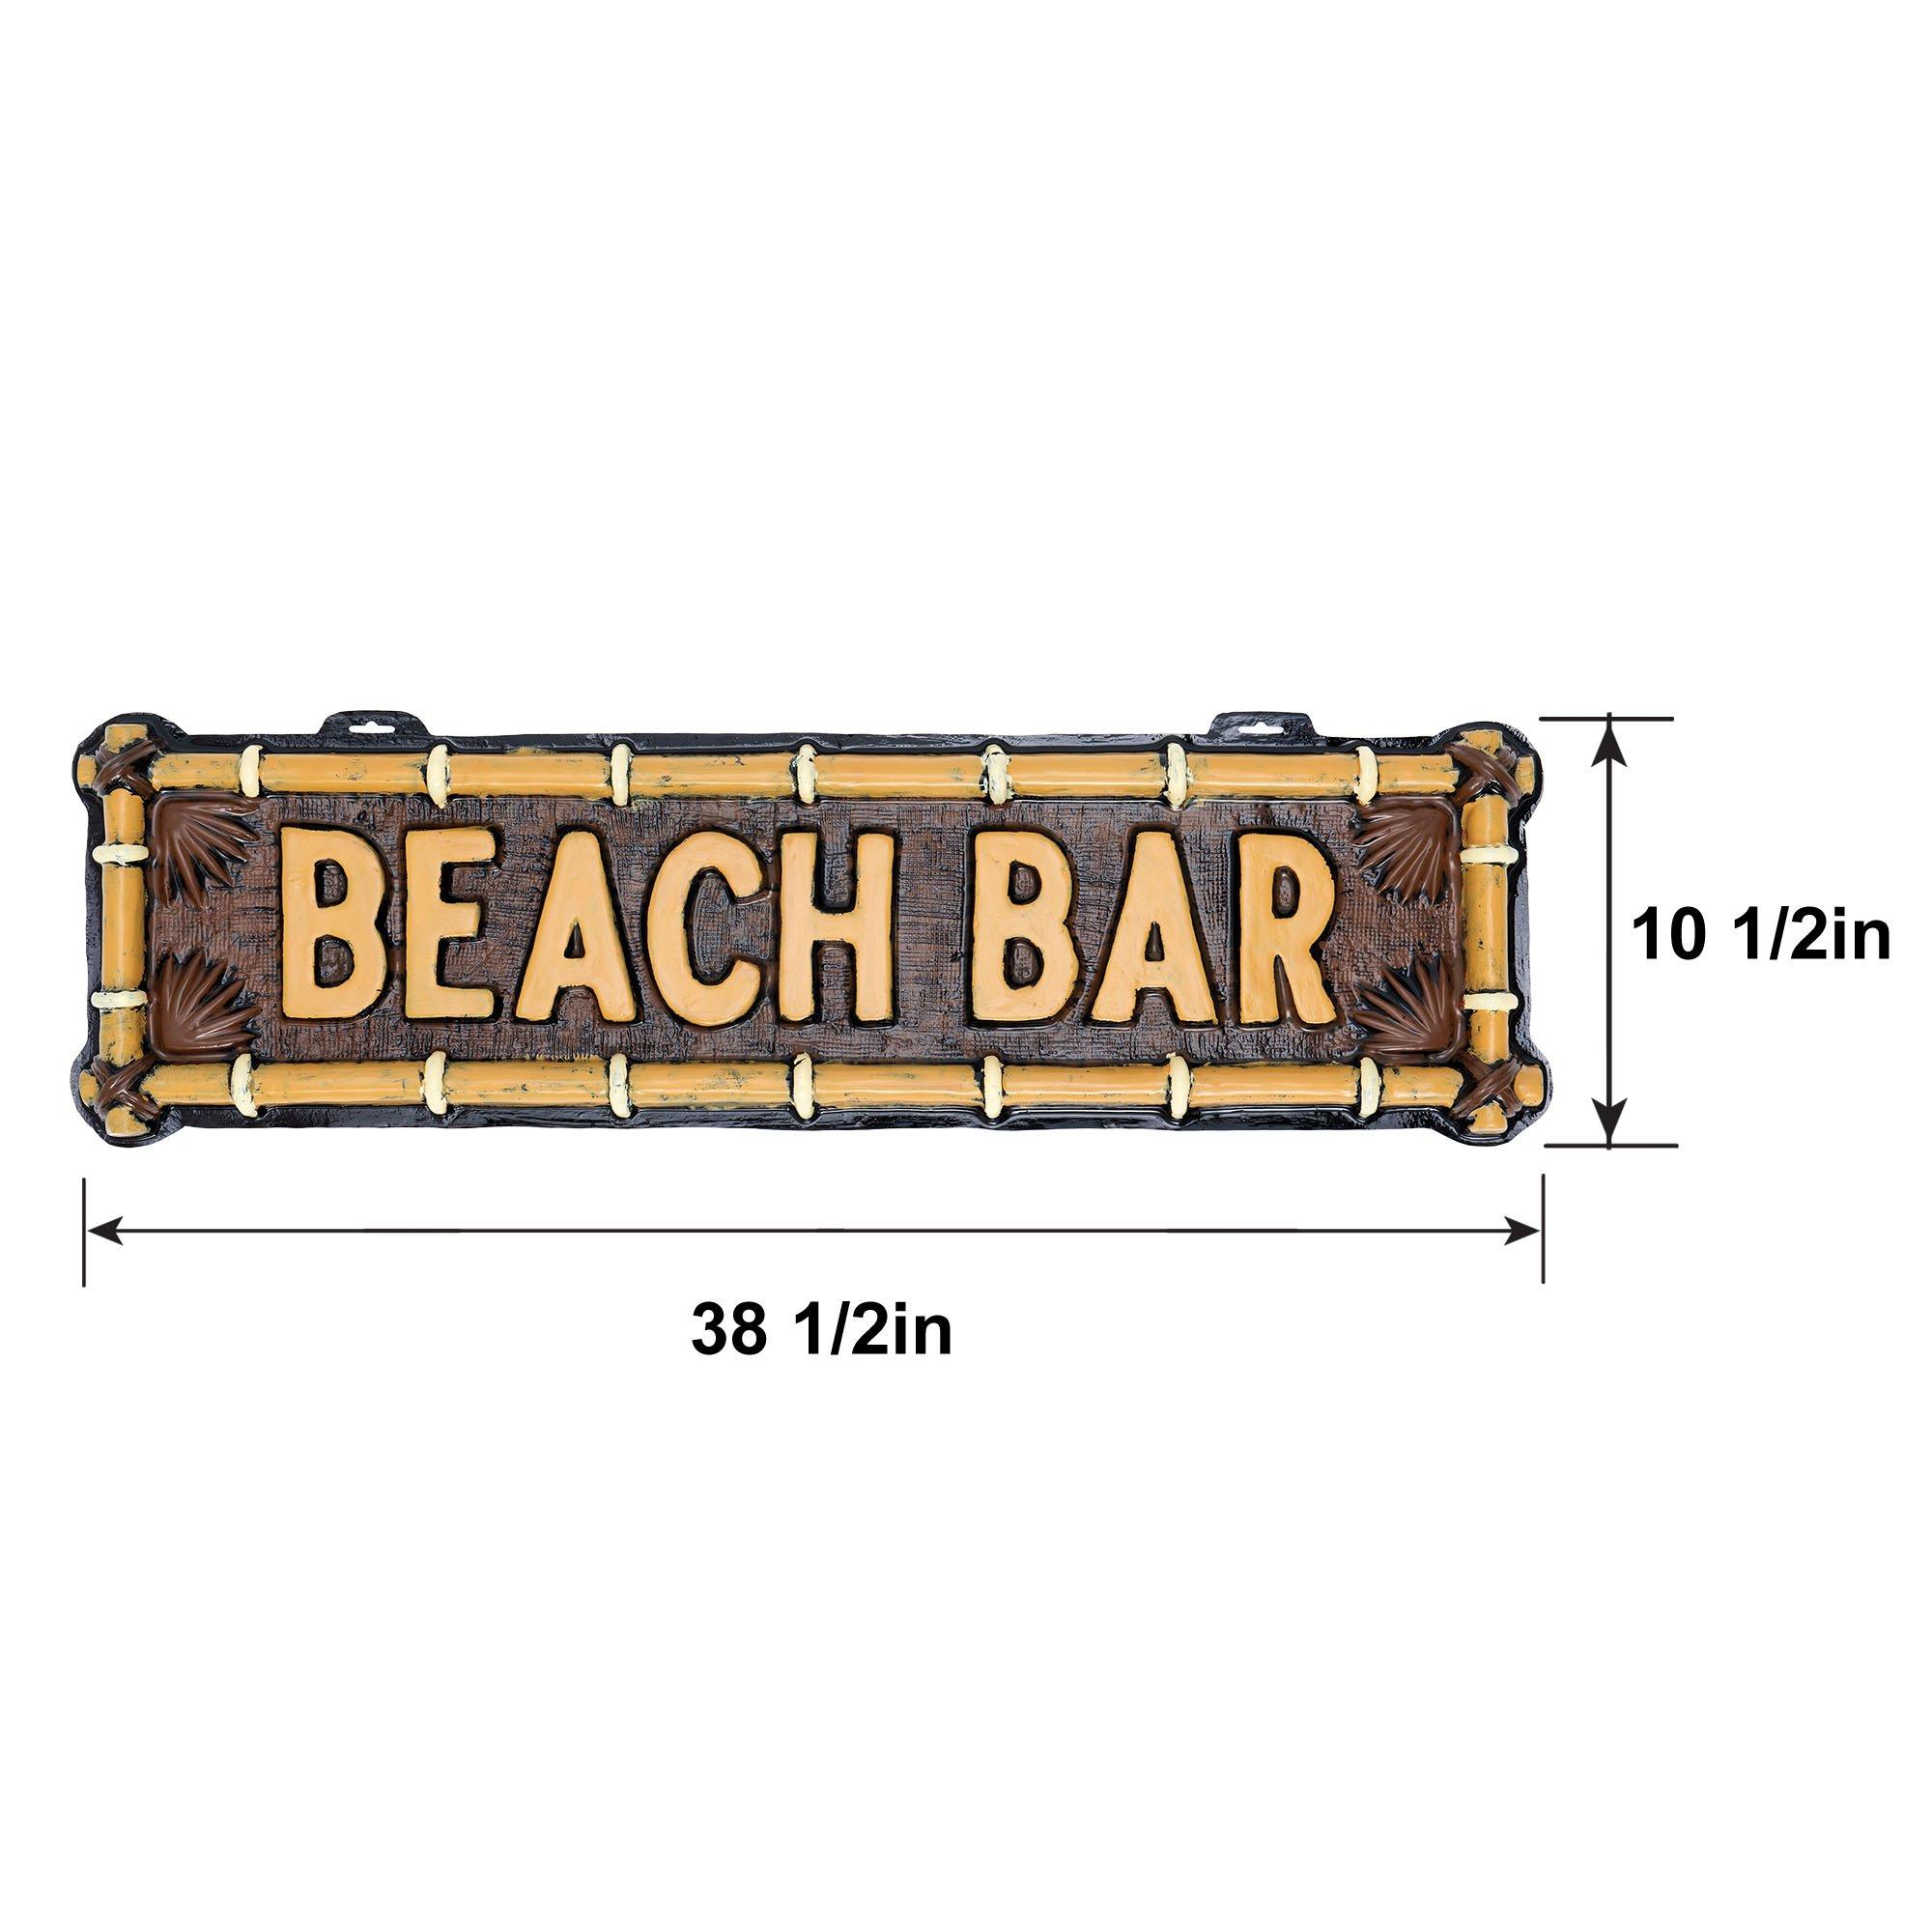 Summer Beach Bar Vacuform Plastic Sign, 38.5in x 10.5in